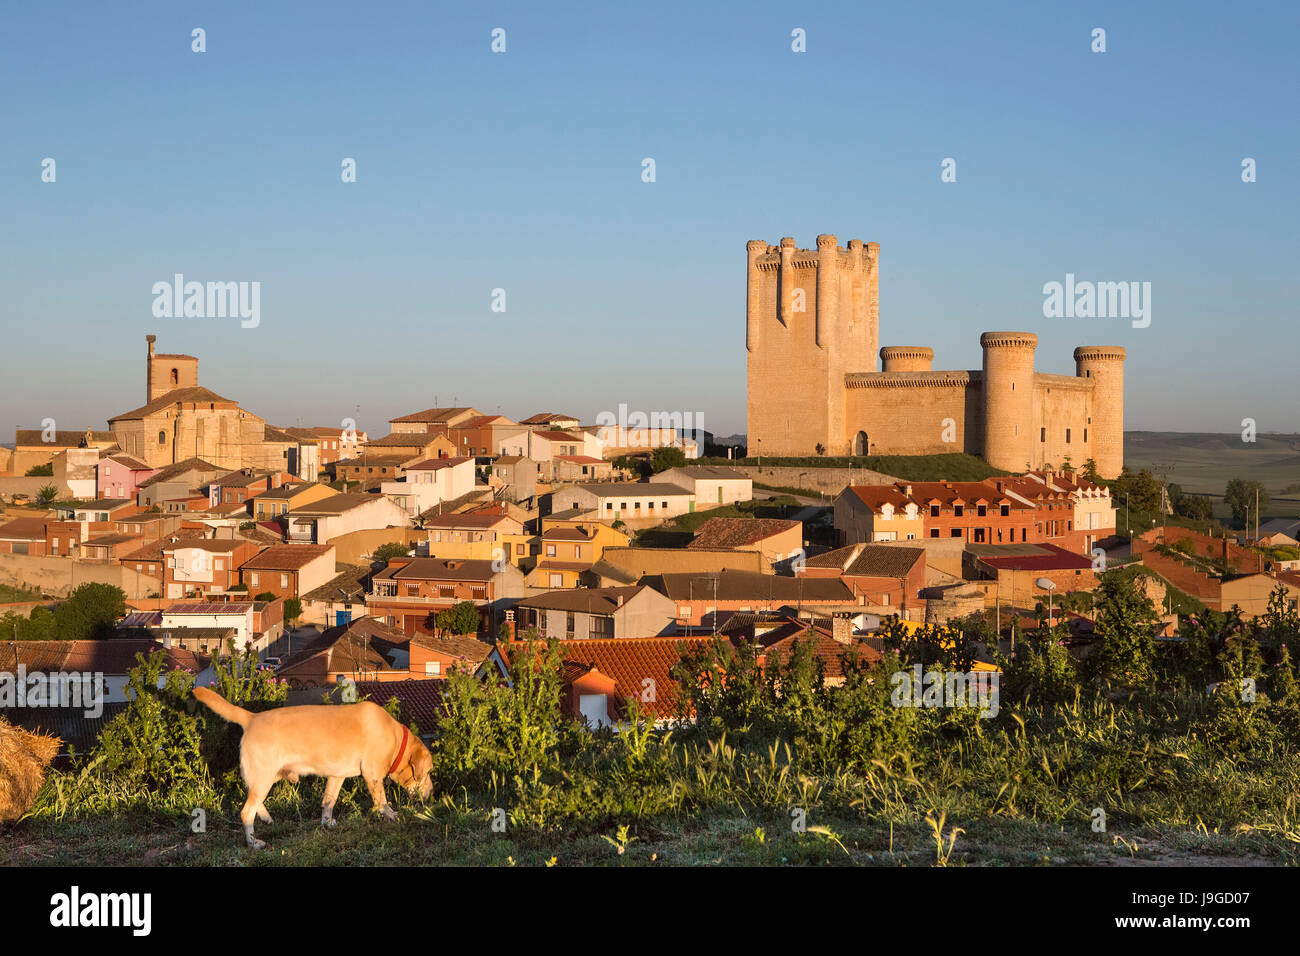 Spain, Castilla Leon Community, Valladolid Province, Torelobaton Castle, Stock Photo